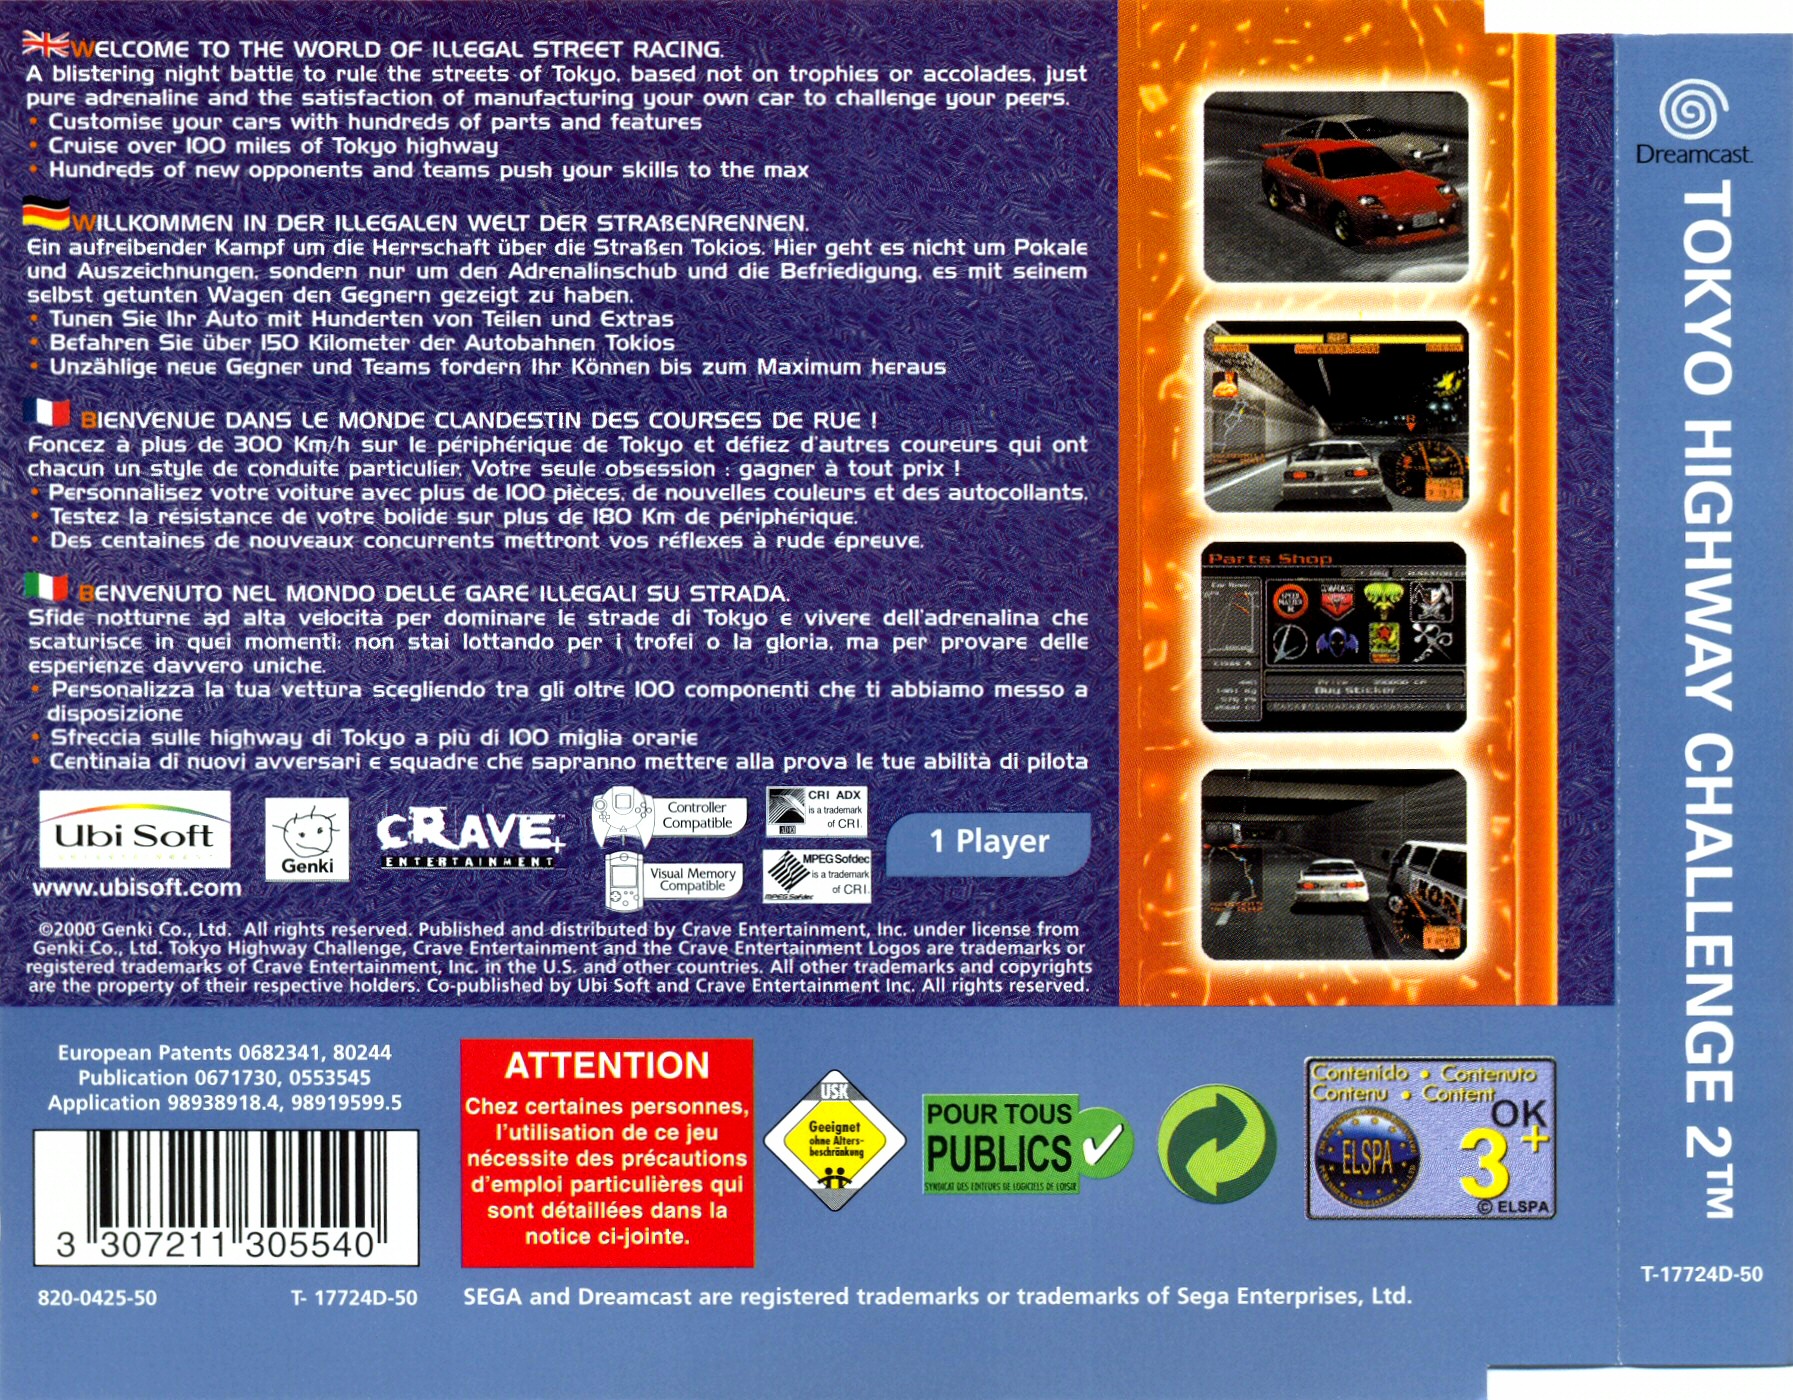 Half life dreamcast. Tokyo Xtreme Racer 2 Dreamcast. Tokyo Xtreme Racer Dreamcast. Tokyo Xtreme Racer 2 Дримкаст обложка. Street Racer игра сега Дримкаст.